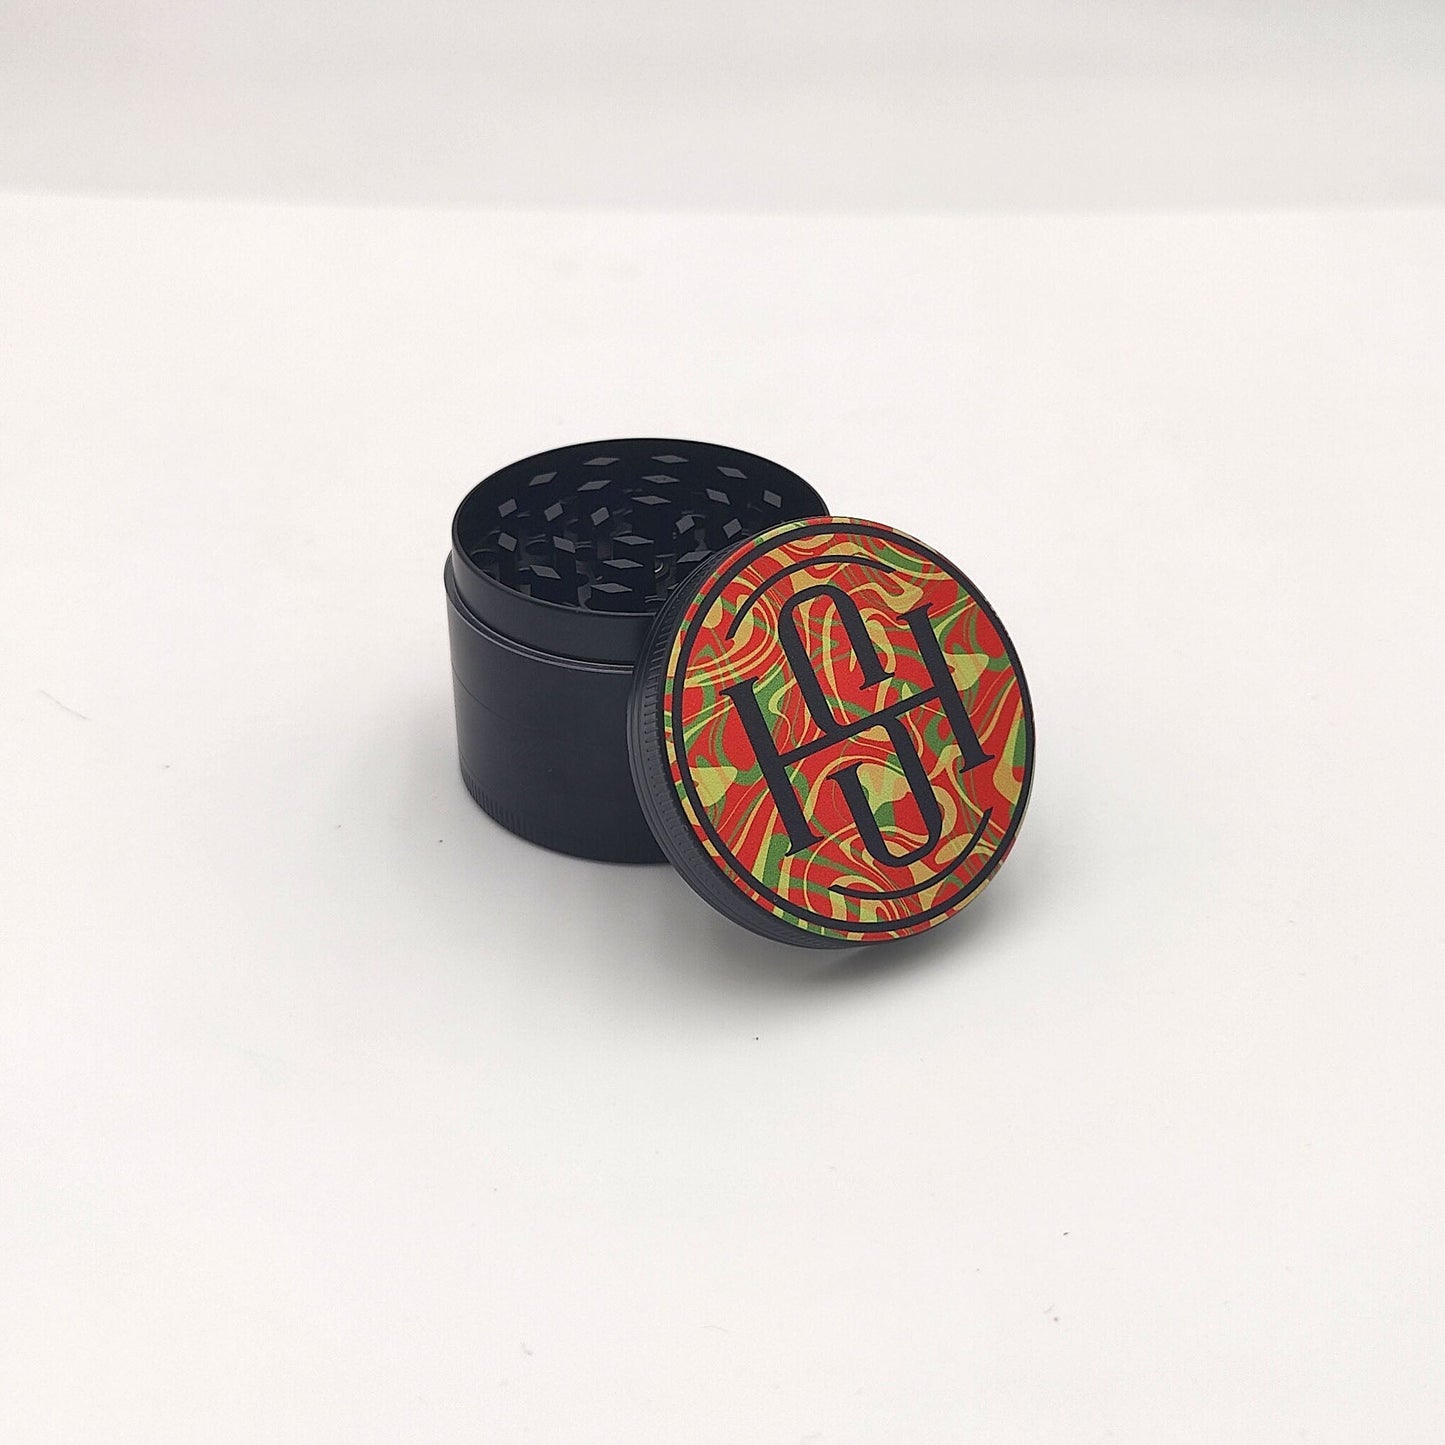 High Society - 4 PC 63mm Ceramic Teflon Coated Grinder - Rasta